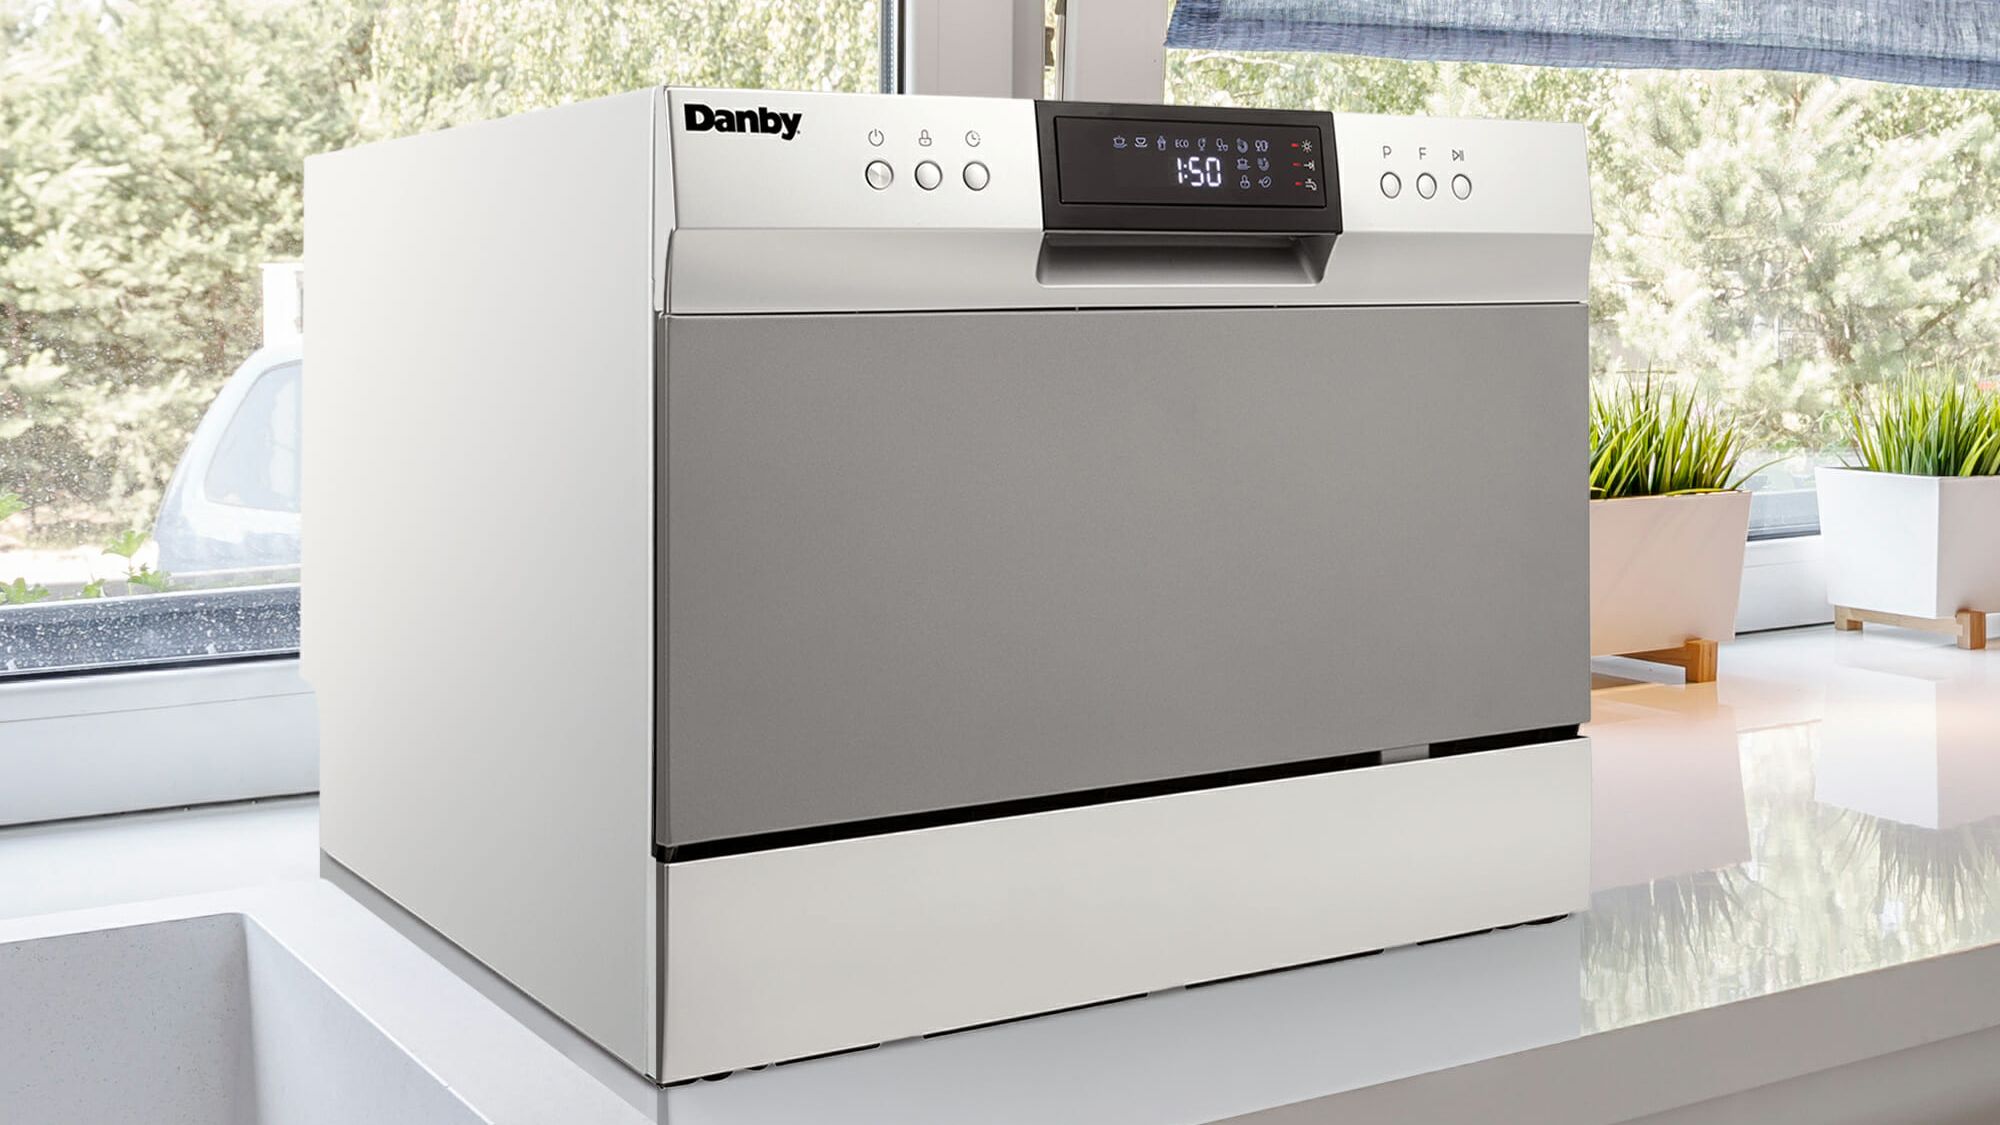  Countertop Dishwasher, HAVA Portable Dishwashers with